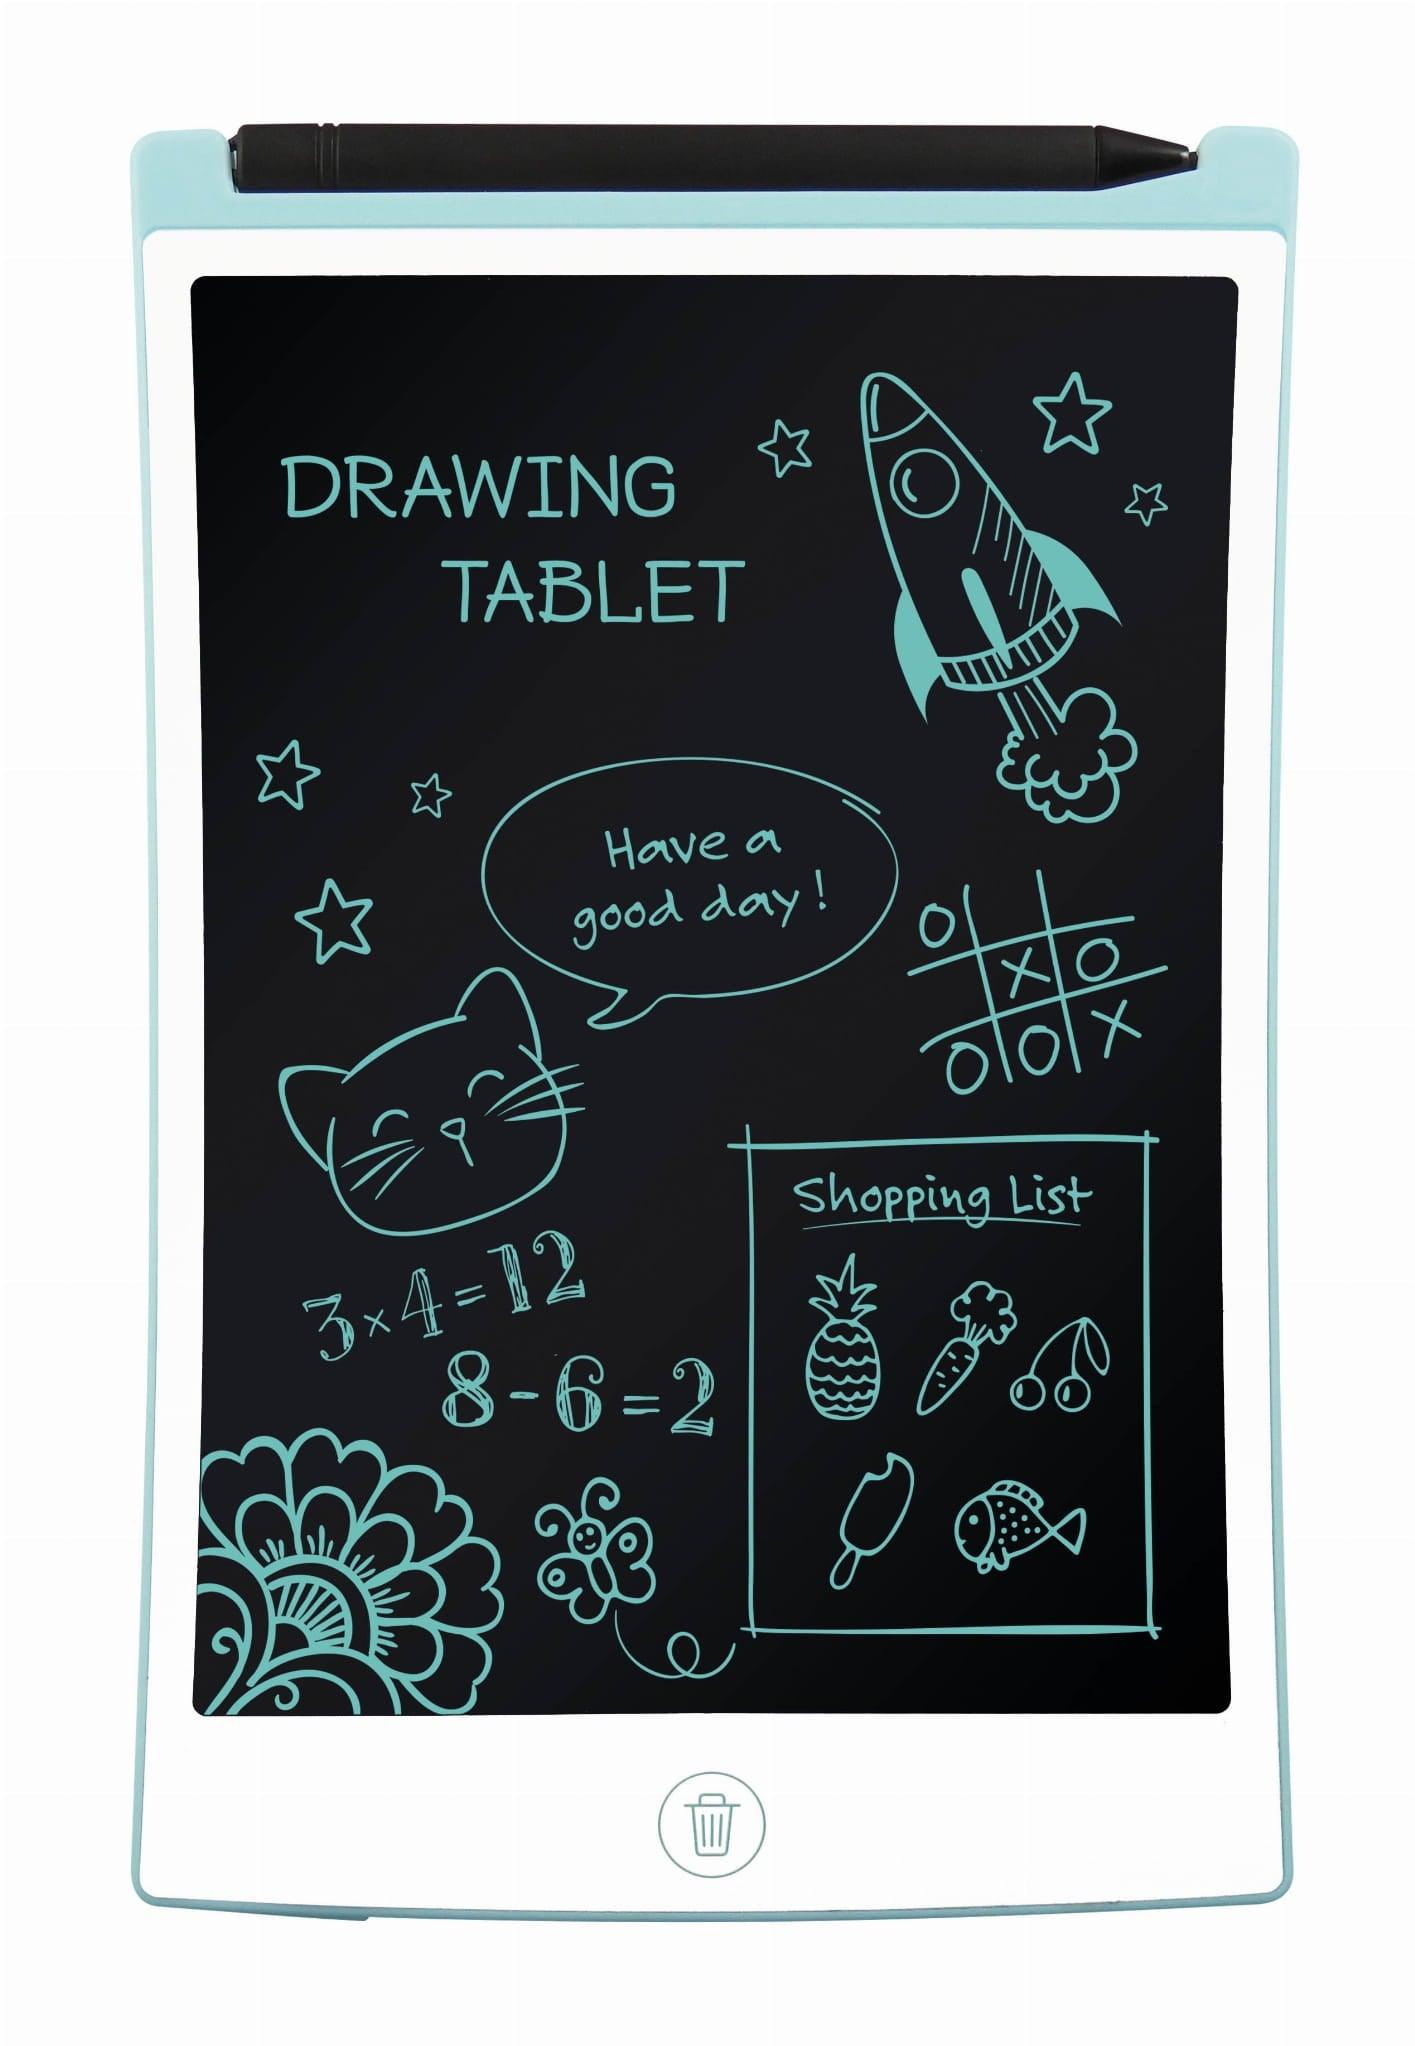 Buki: tablet do rysowania Drawing Tablet - Noski Noski